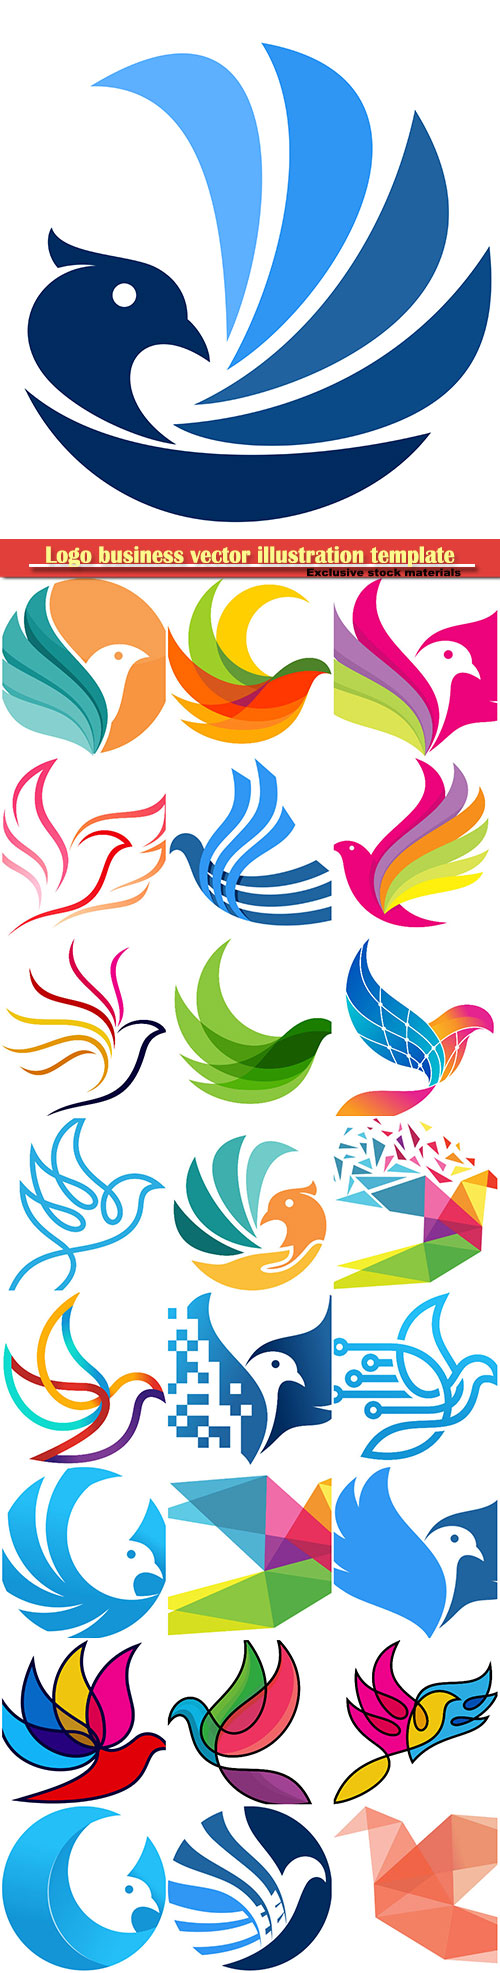 Birds logo business vector illustration template # 83